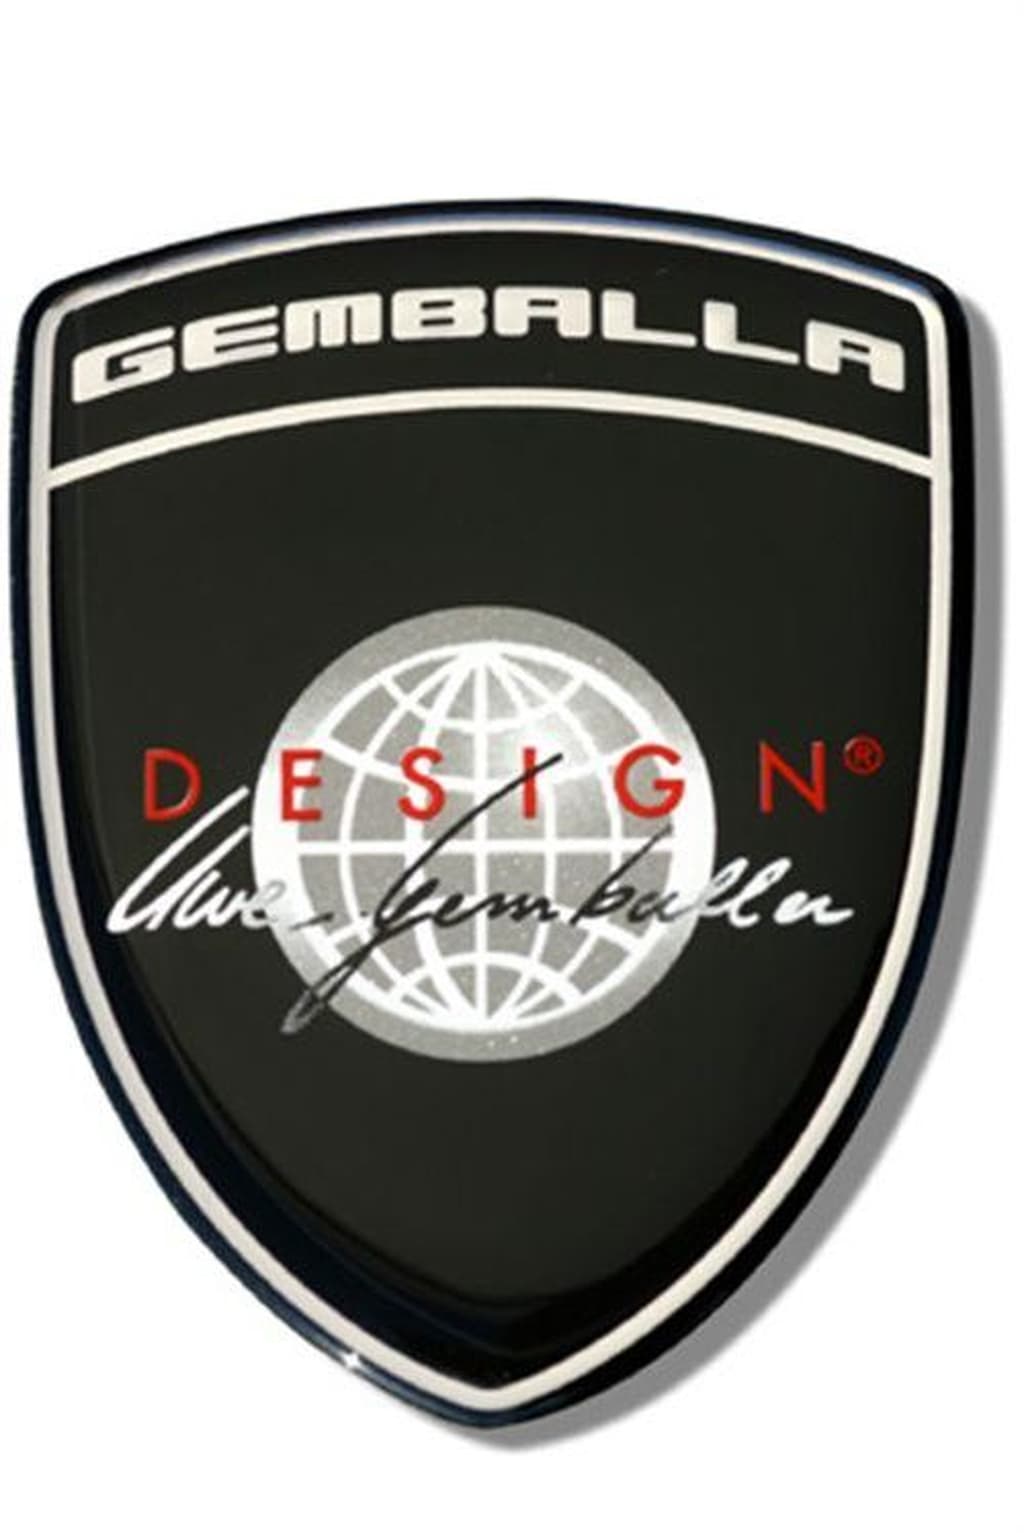 Gemballa Logo - Gemballa Porsche.com.au